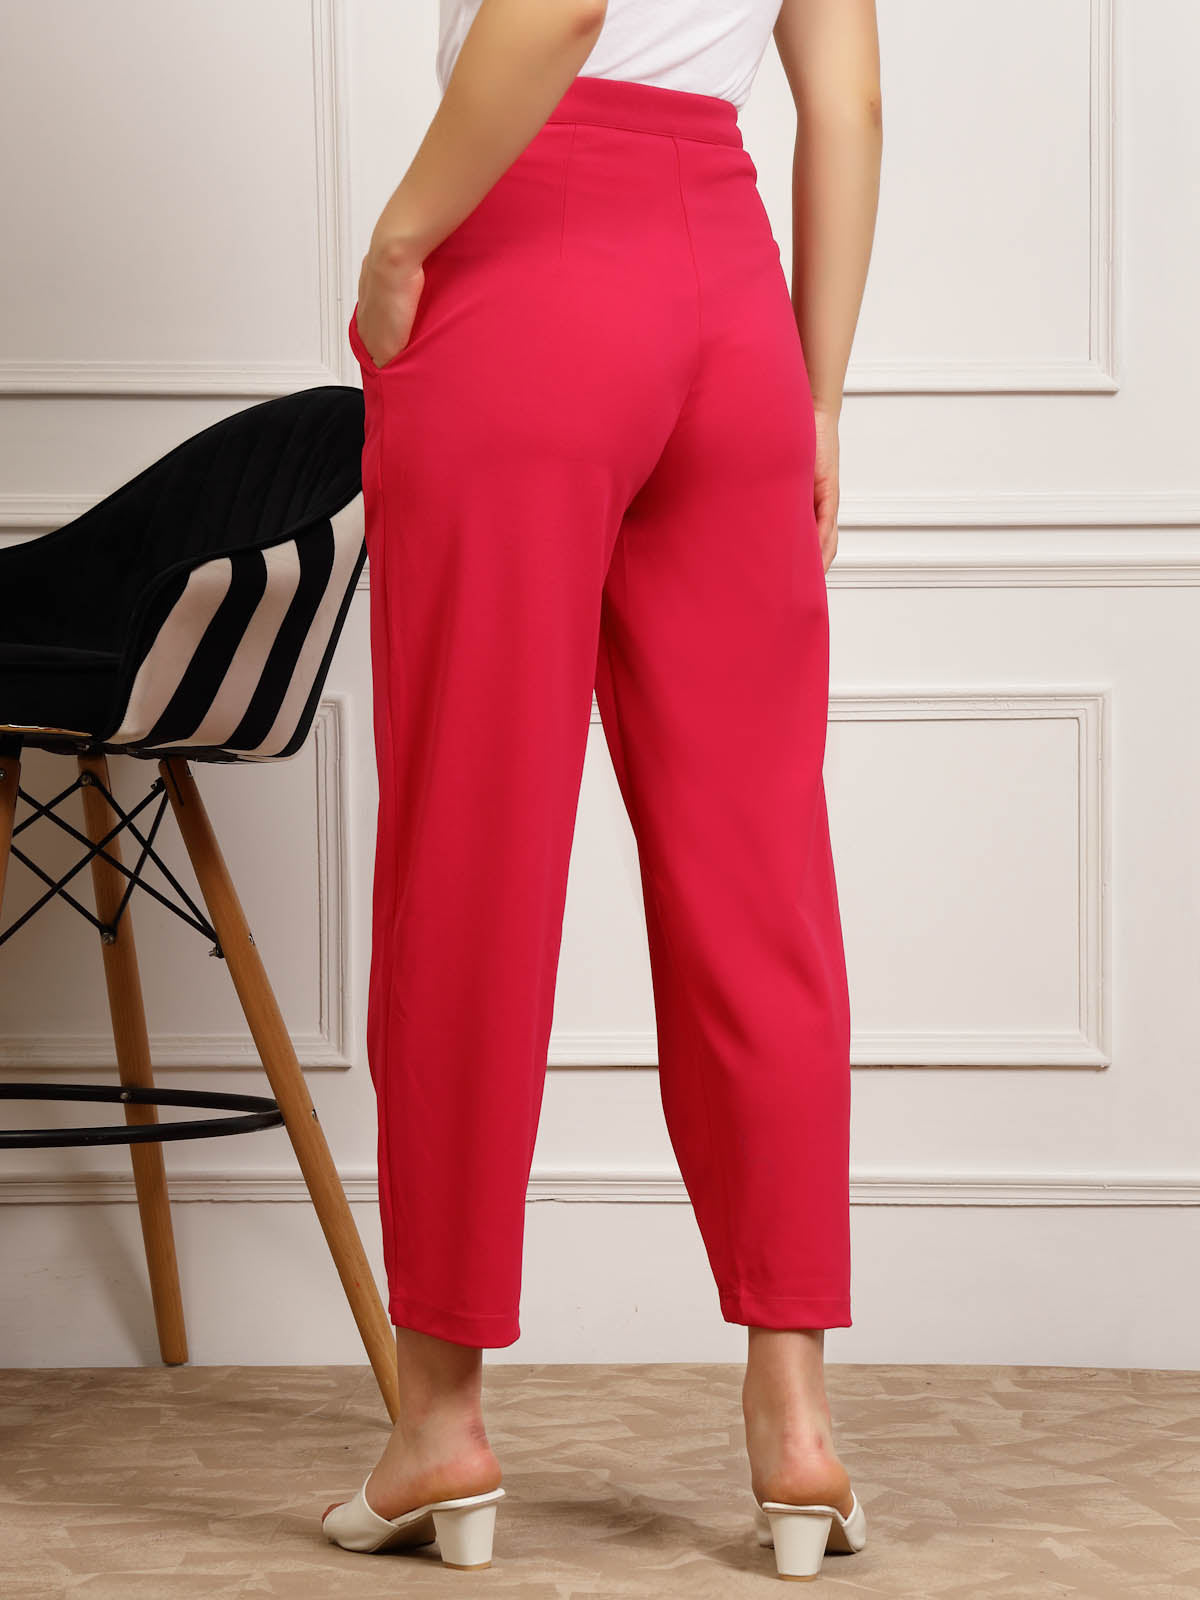 Topshop Khaki Slouch Peg Trousers With Elastic Back | Smart casual dress,  Khaki pants outfit, Smart casual dress code